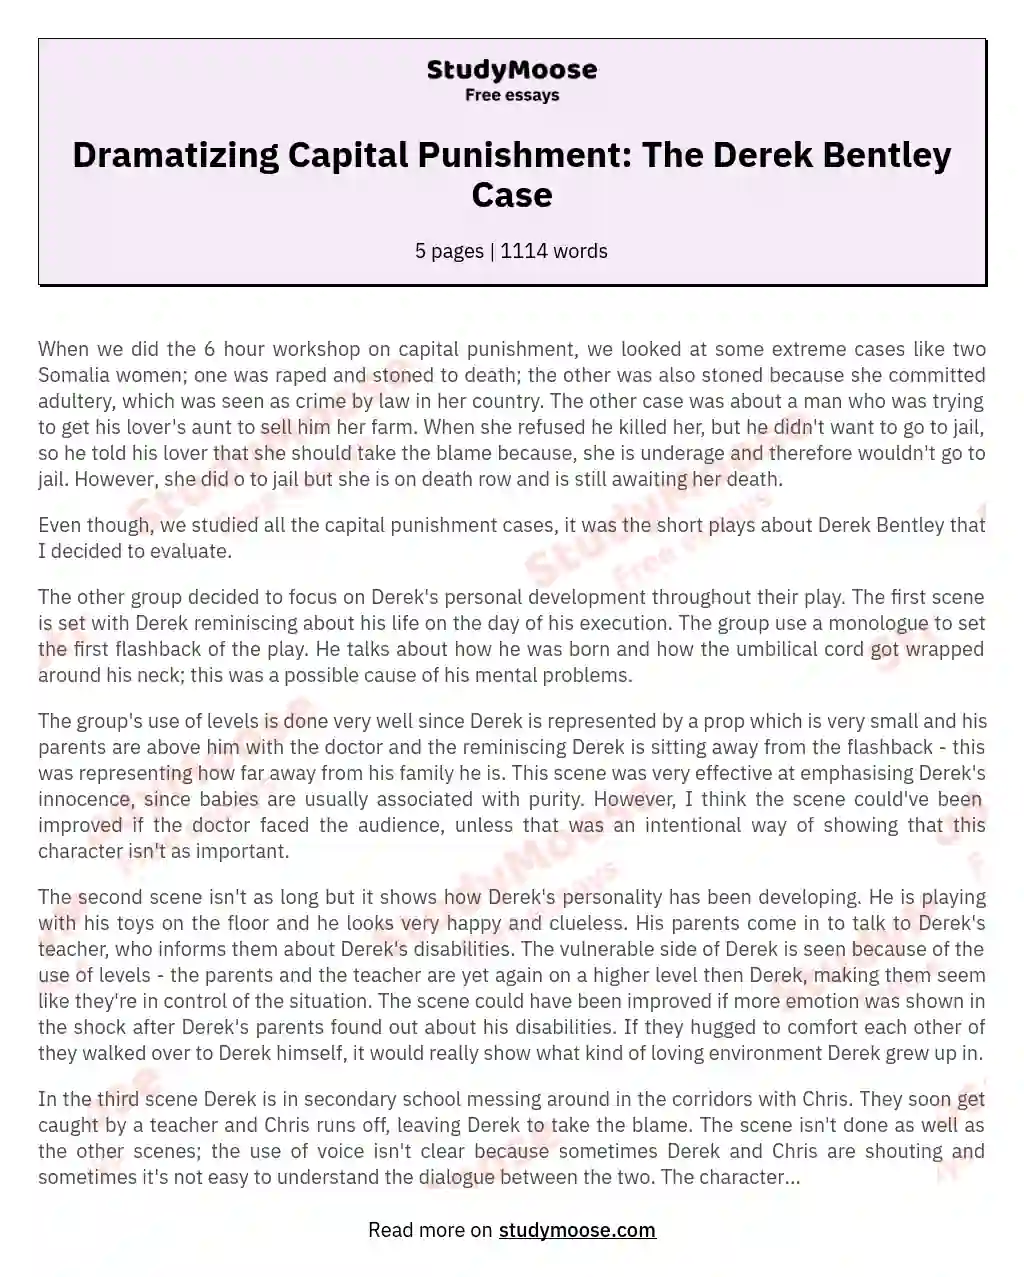 Dramatizing Capital Punishment: The Derek Bentley Case essay